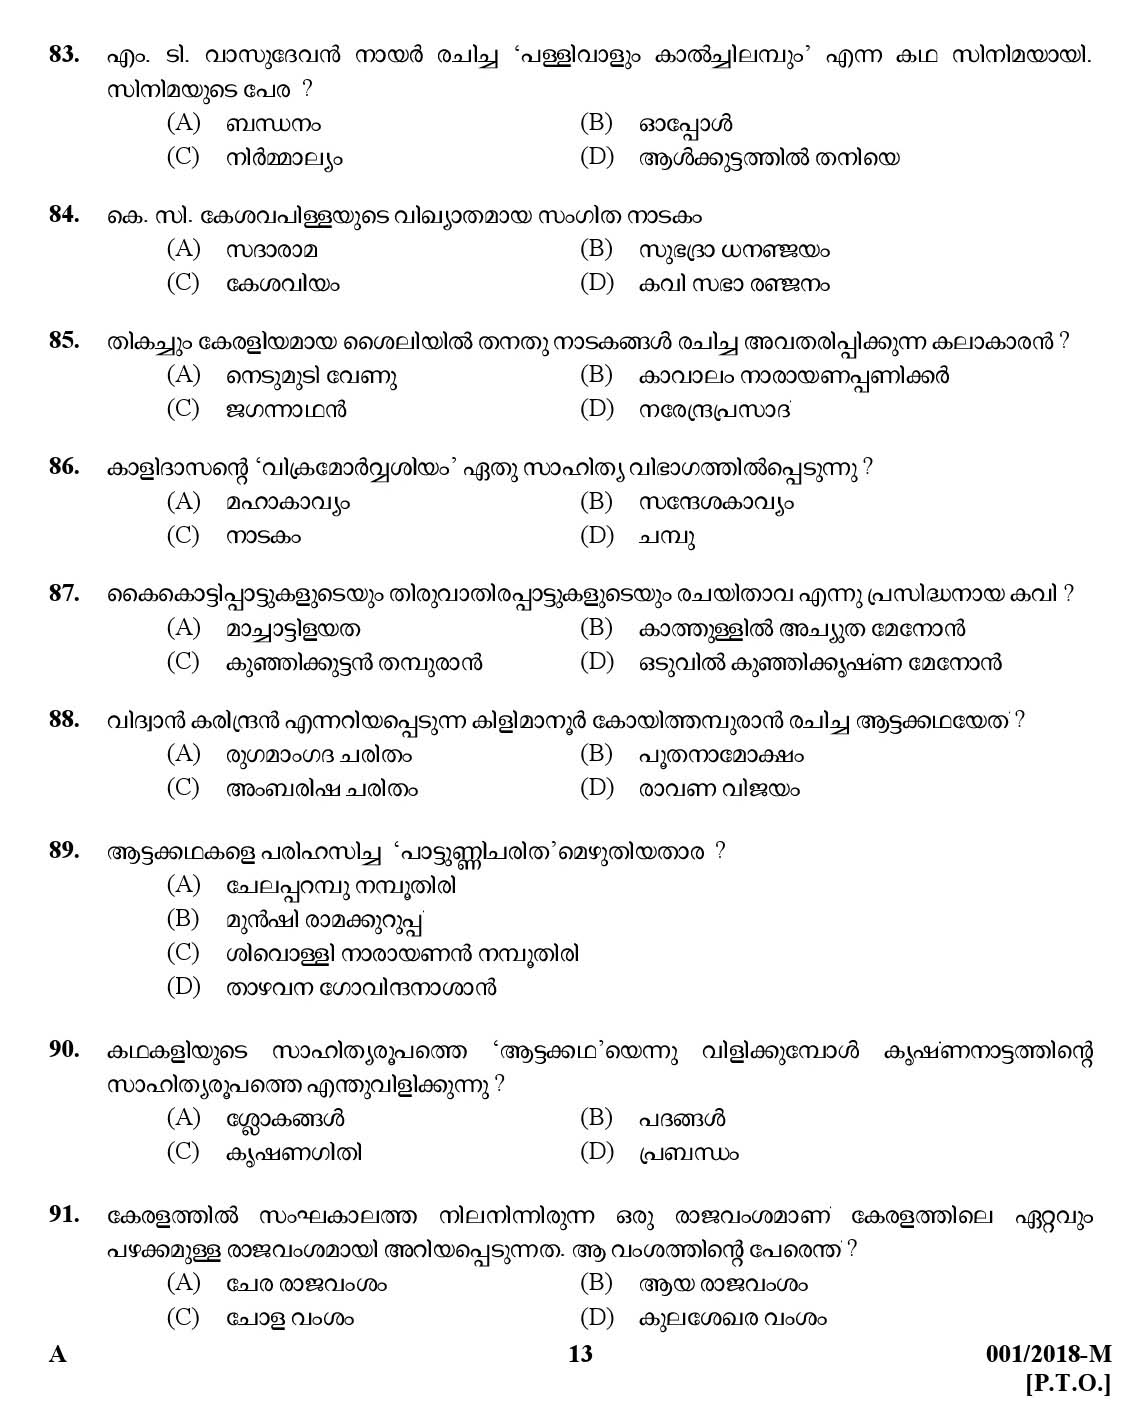 Kerala PSC High School Assistant Malayalam Question Code 0012018 M 12